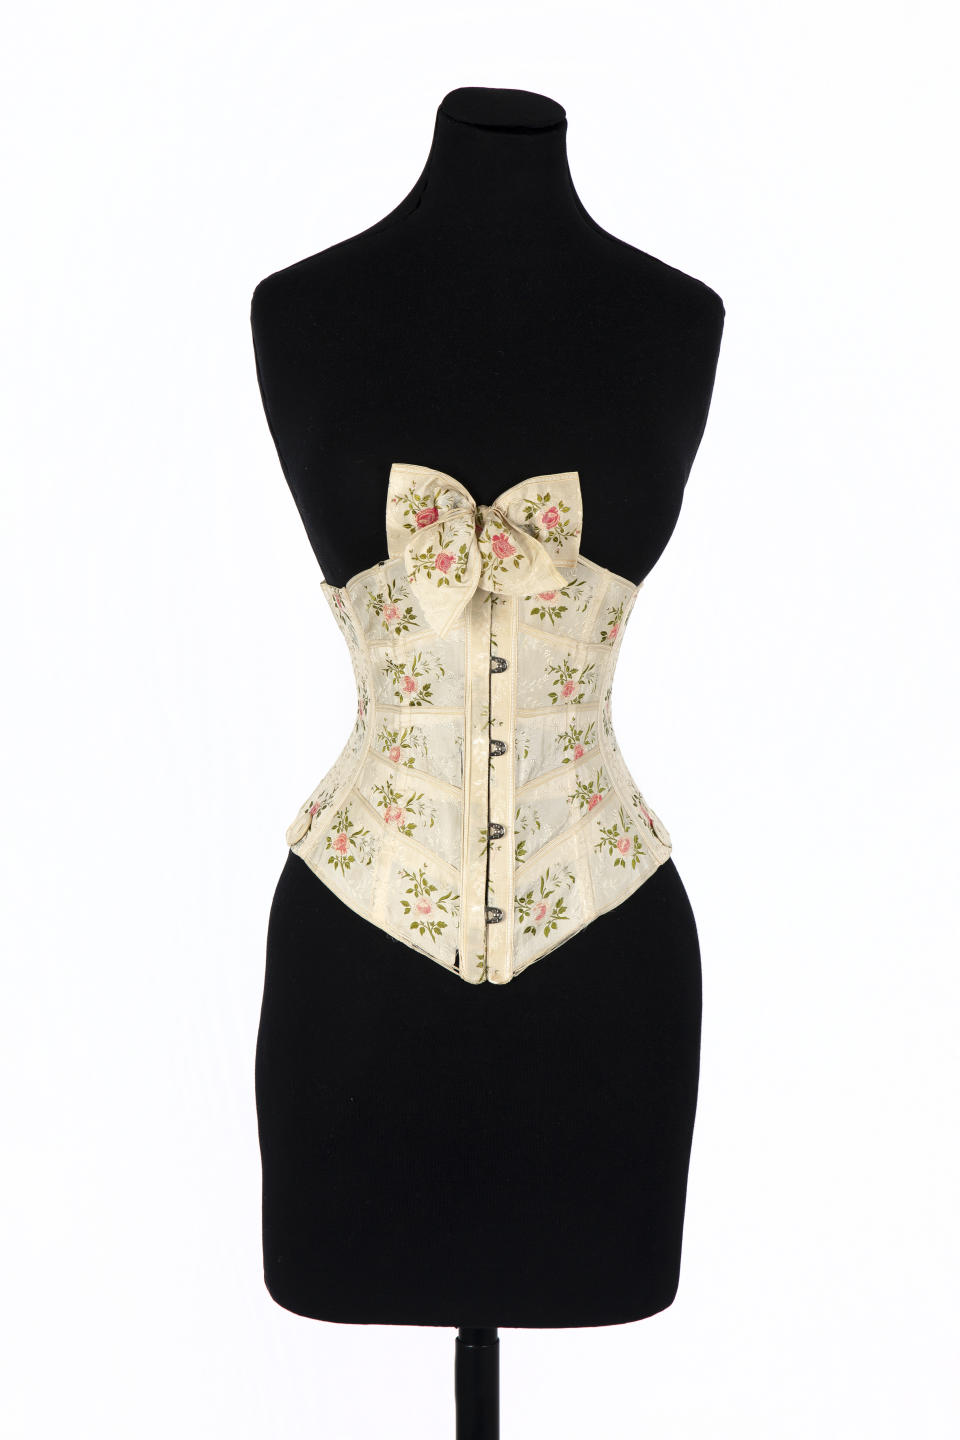 Feminine A La Couronne corset, 1900-1905 